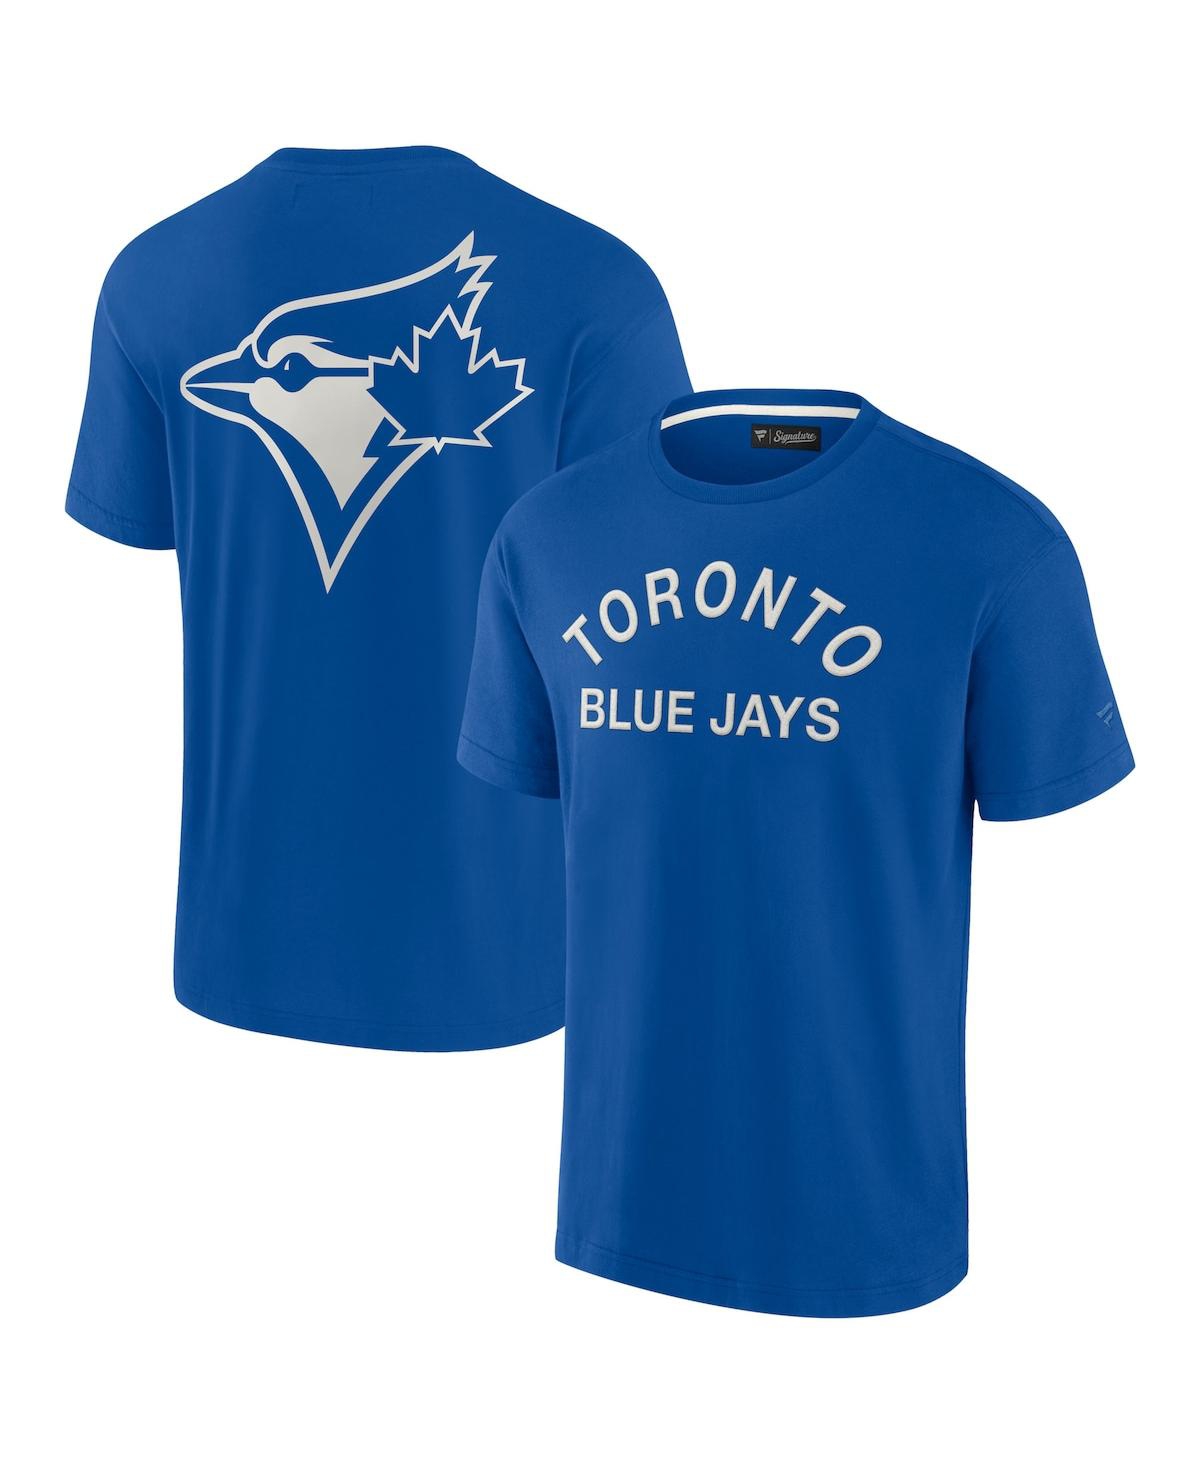 Men's and Women's Fanatics Signature Royal Toronto Blue Jays Super Soft Short Sleeve T-shirt - Royal